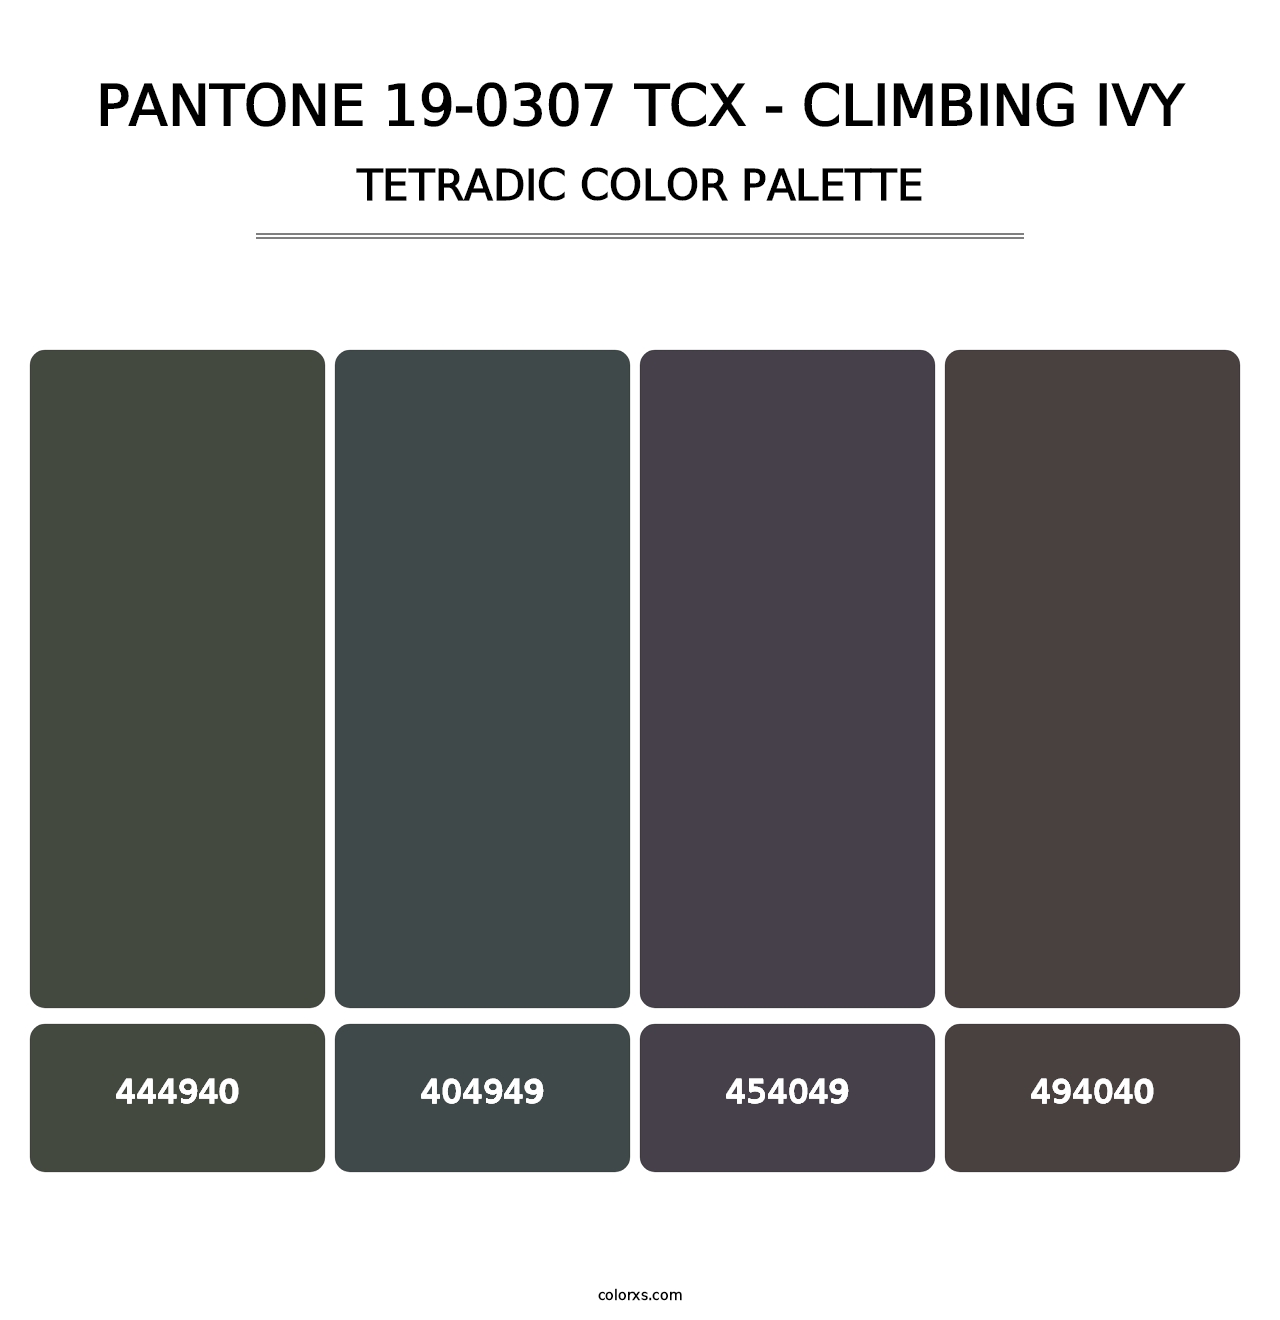 PANTONE 19-0307 TCX - Climbing Ivy - Tetradic Color Palette